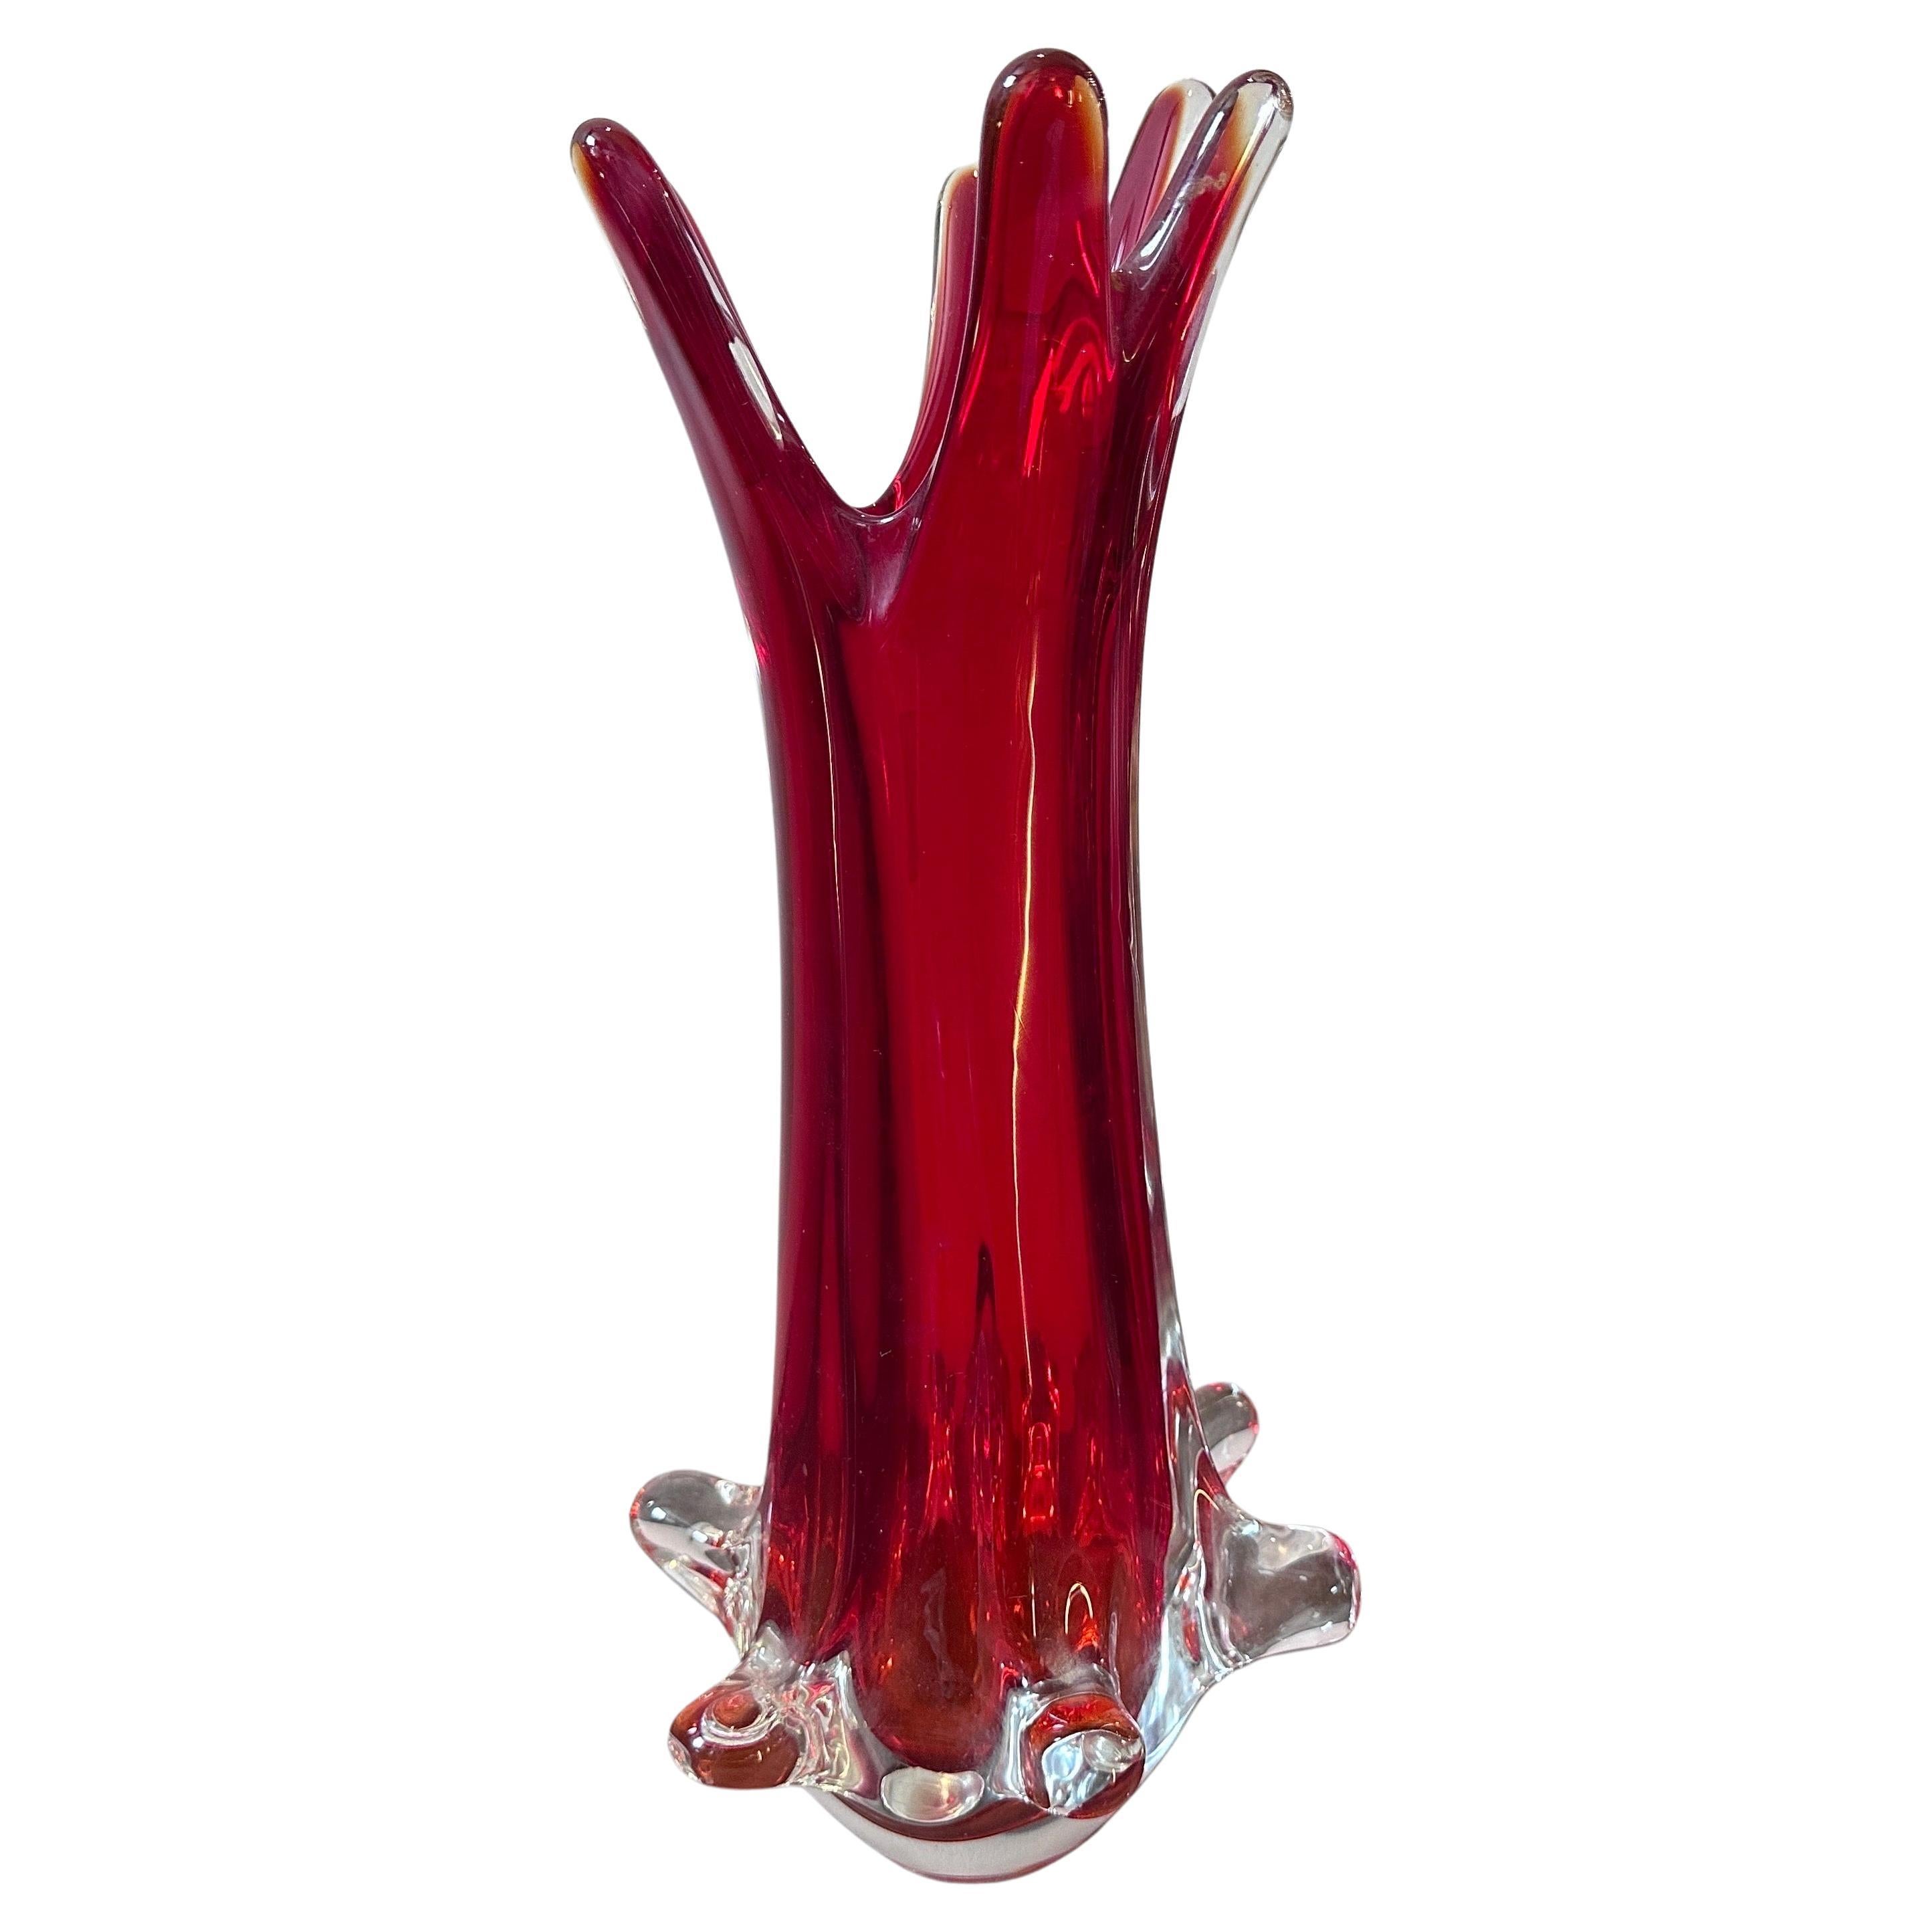 Grand vase moderniste en verre de Murano rouge Sommerso des années 1980 par Seguso